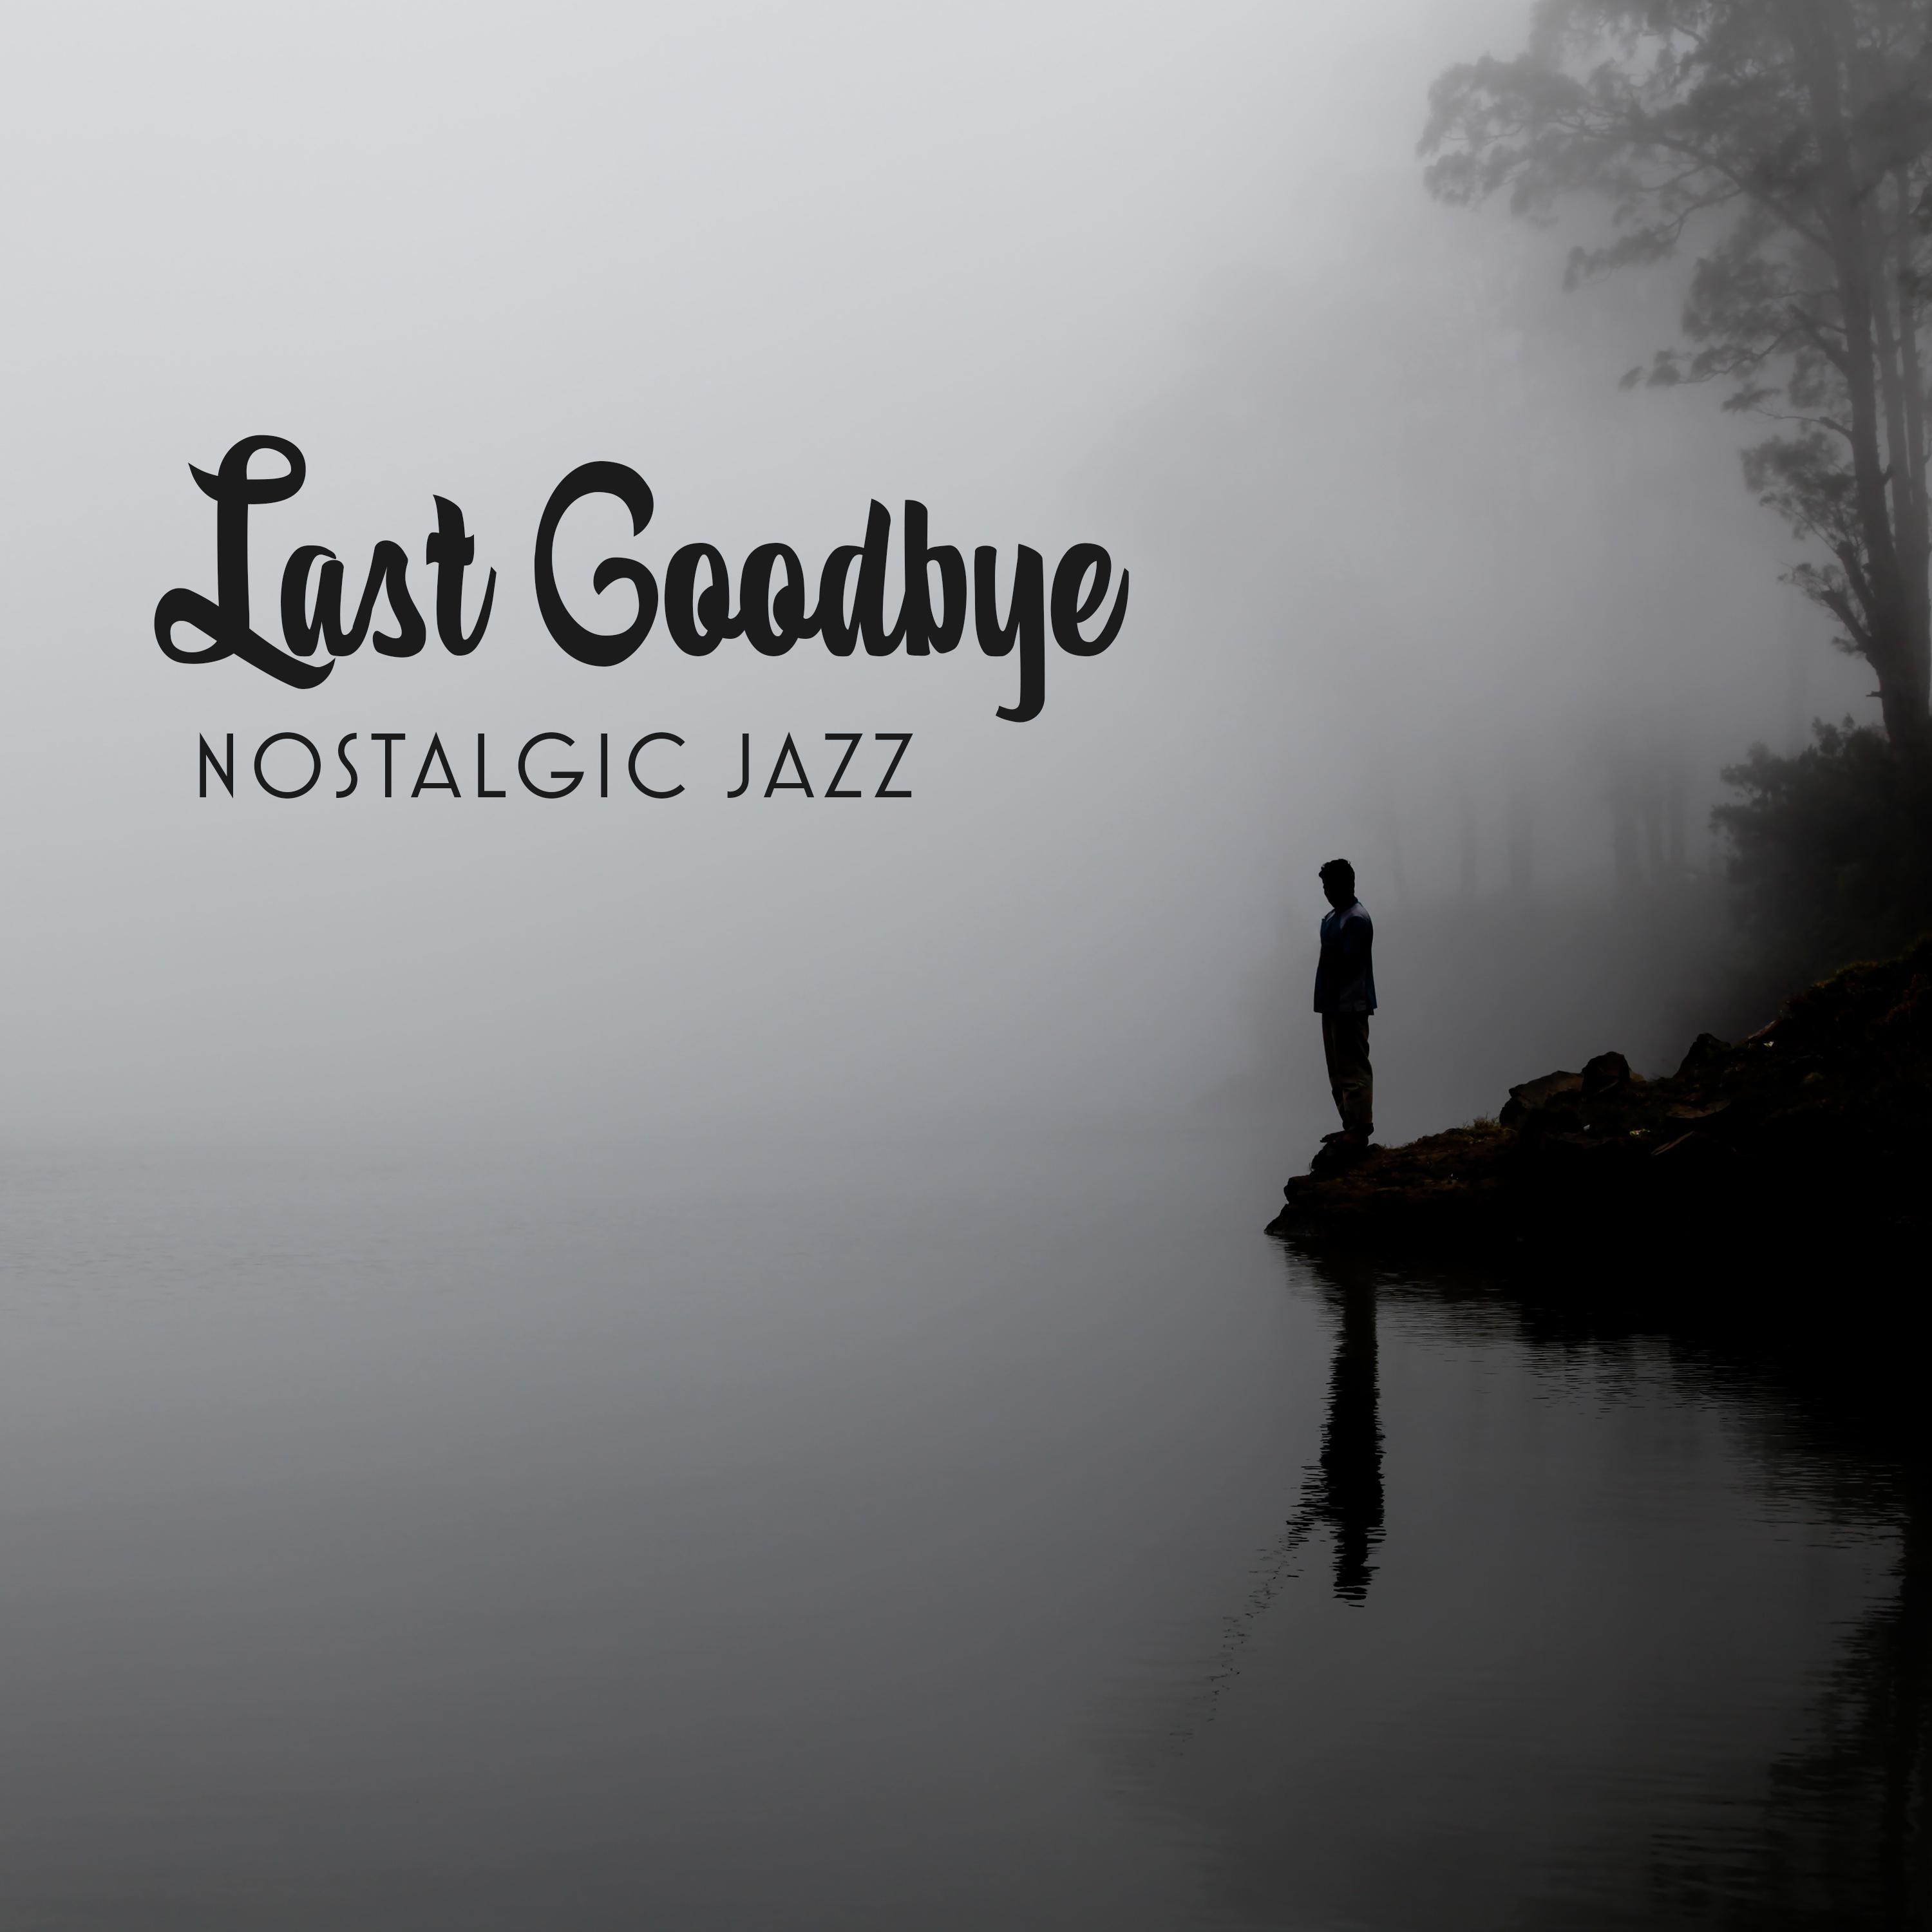 Last Goodbye  Nostalgic Jazz  Piano Bar, Instrumental Songs, Broken Heart, Sad Lounge, Background Music